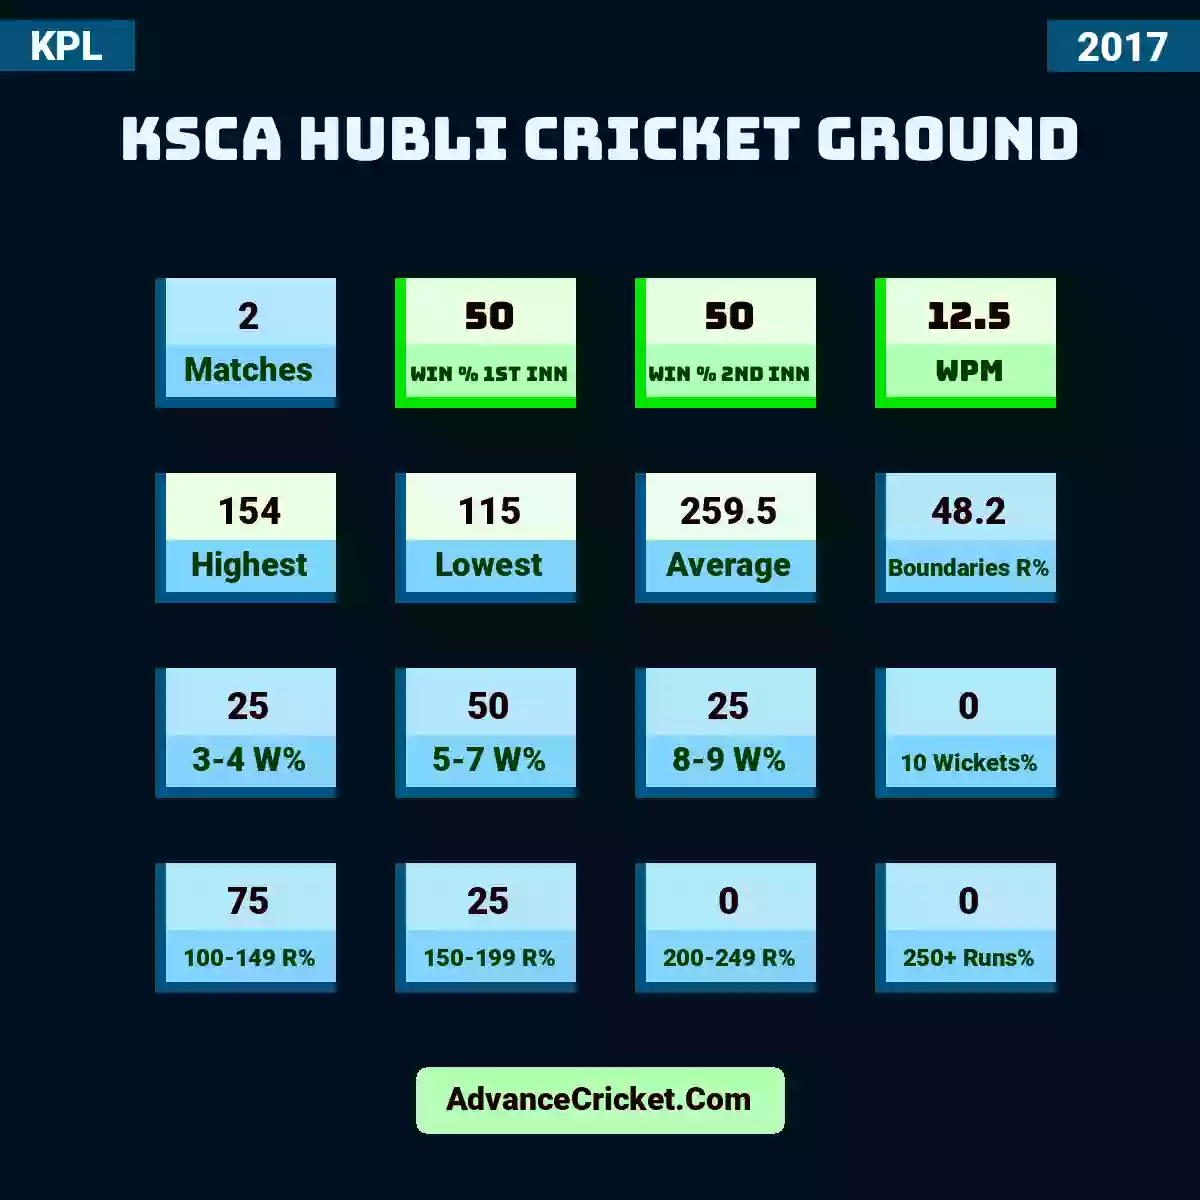 Image showing KSCA Hubli Cricket Ground with Matches: 2, Win % 1st Inn: 50, Win % 2nd Inn: 50, WPM: 12.5, Highest: 154, Lowest: 115, Average: 259.5, Boundaries R%: 48.2, 3-4 W%: 25, 5-7 W%: 50, 8-9 W%: 25, 10 Wickets%: 0, 100-149 R%: 75, 150-199 R%: 25, 200-249 R%: 0, 250+ Runs%: 0.